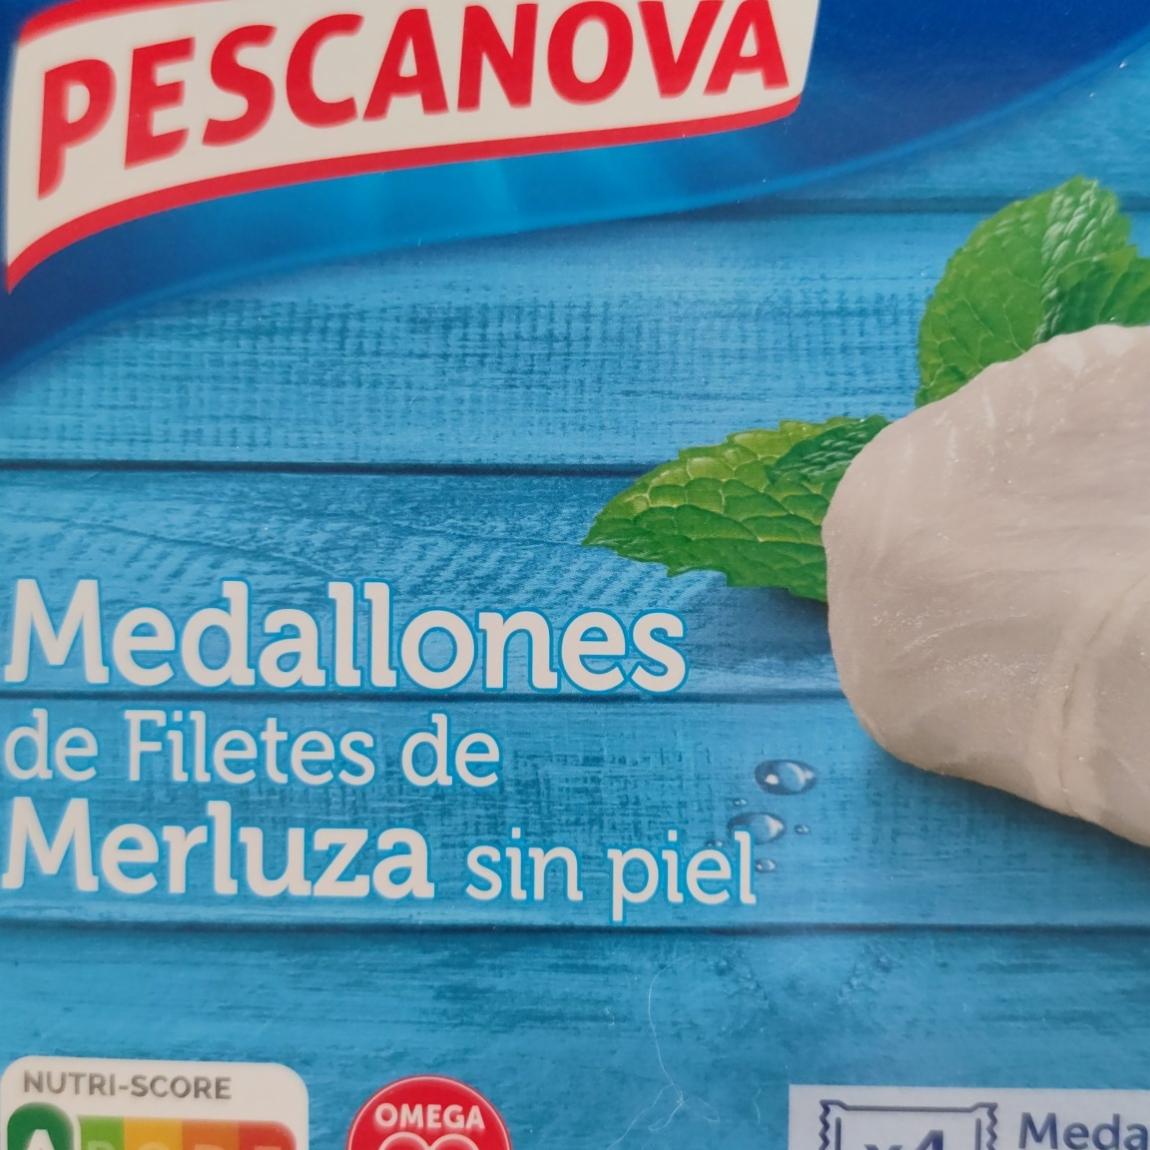 Fotografie - Medallones de Filetes de Merluza sin piel Pescanova